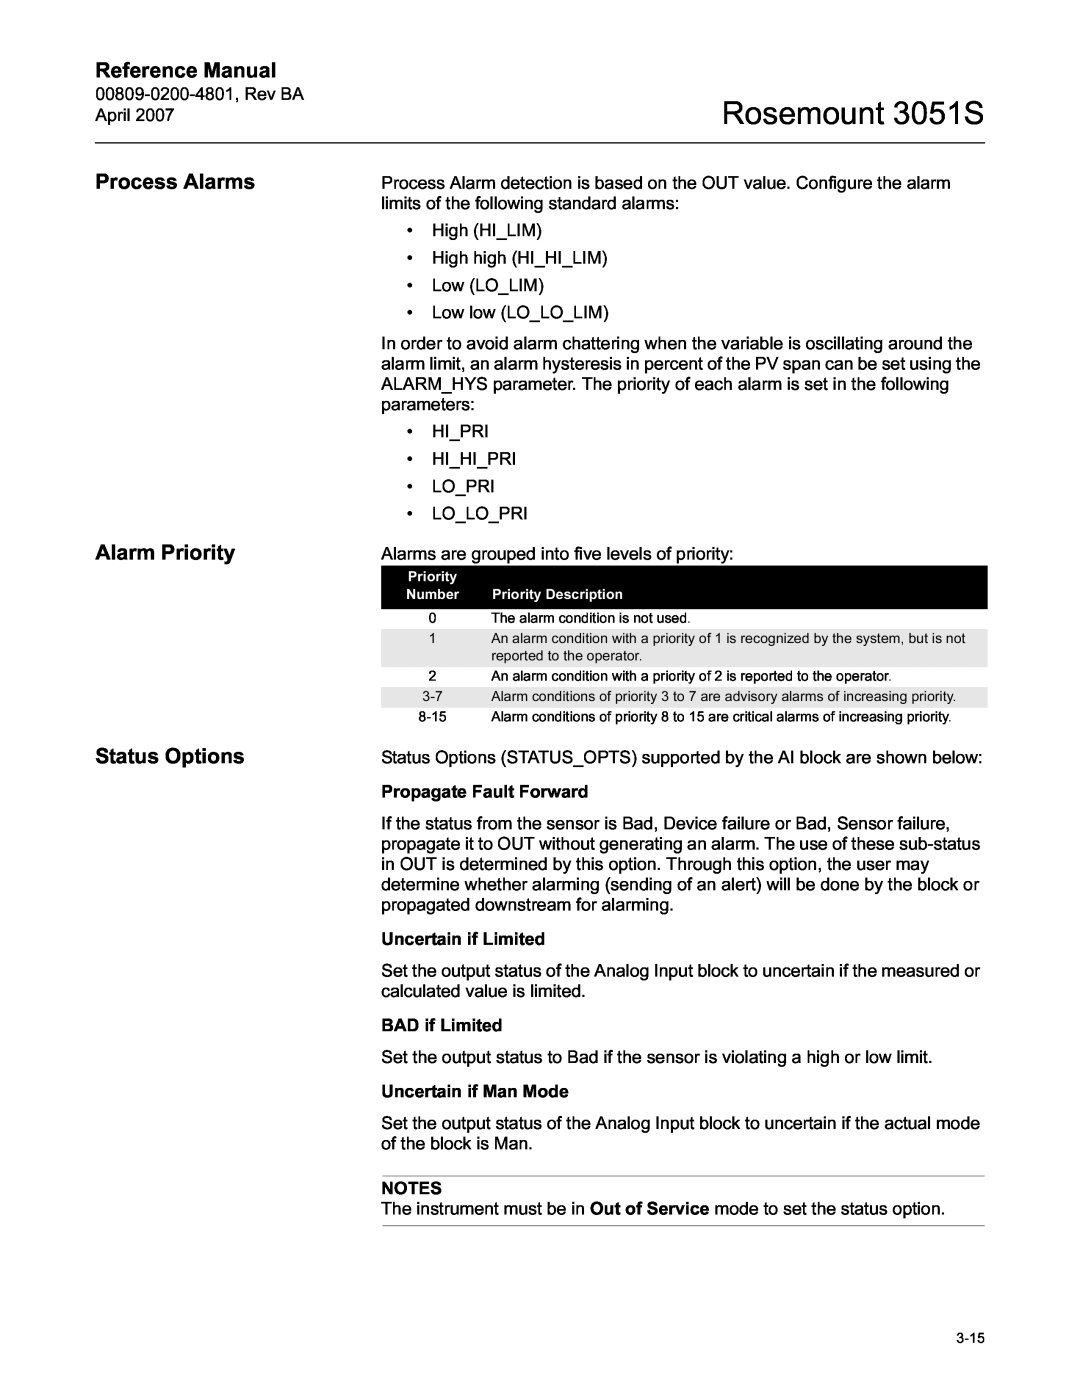 Emerson manual Process Alarms, Alarm Priority, Status Options, Rosemount 3051S, Reference Manual 